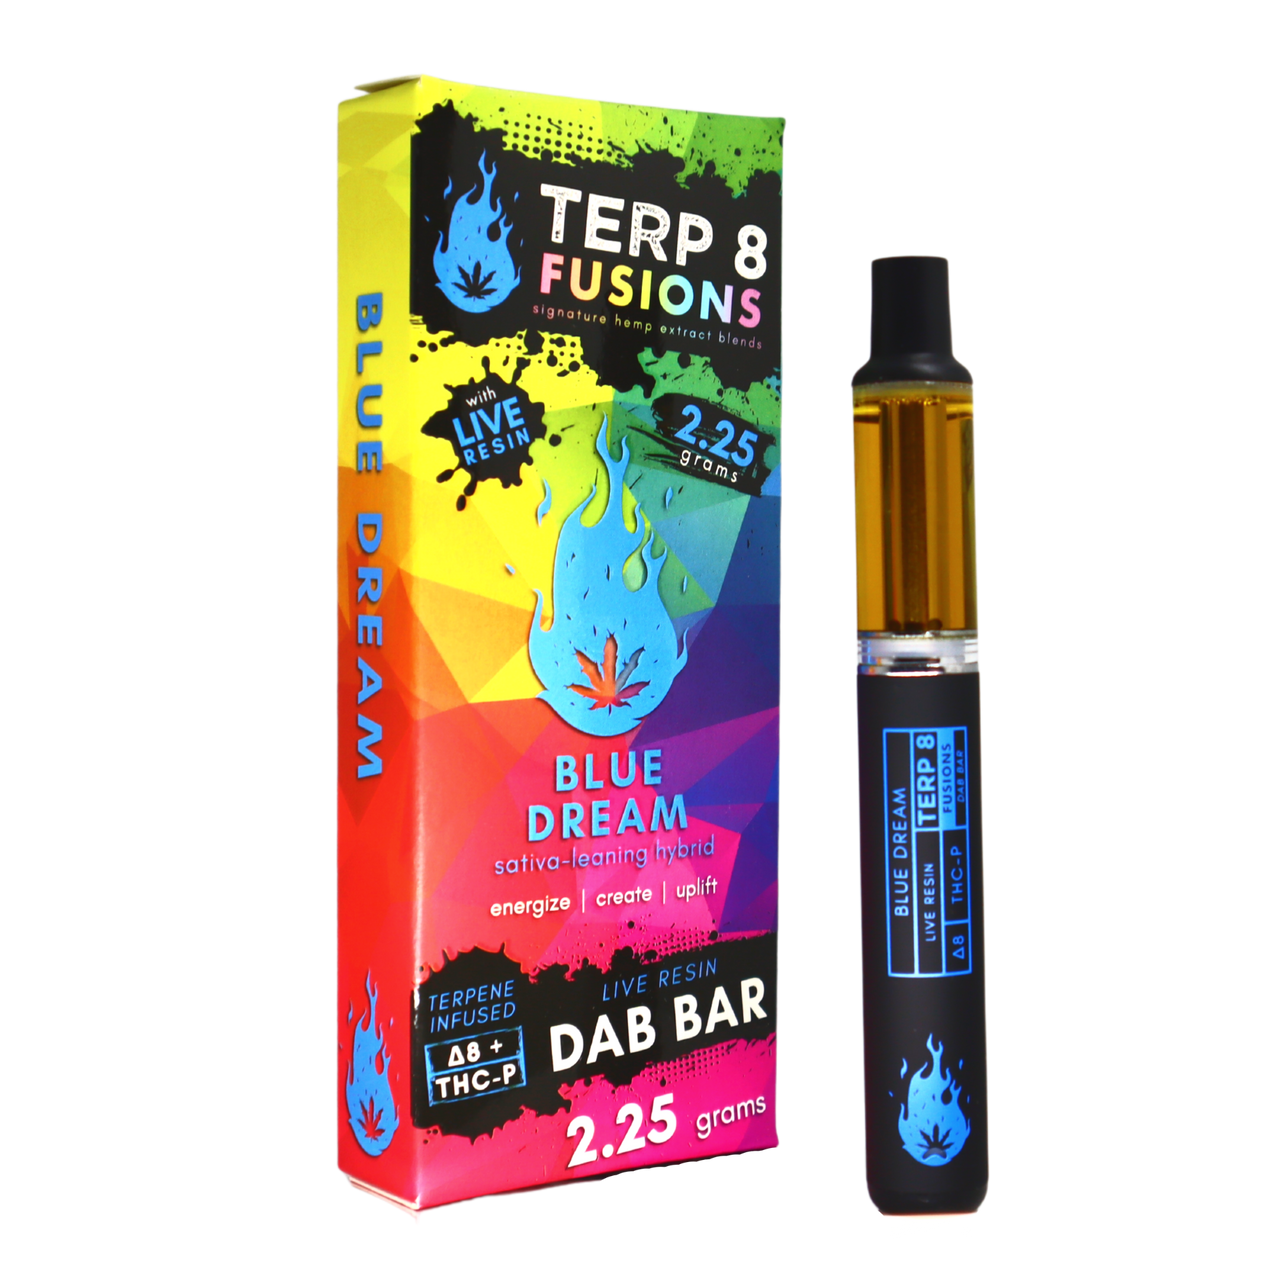 dabs weed vaporizer